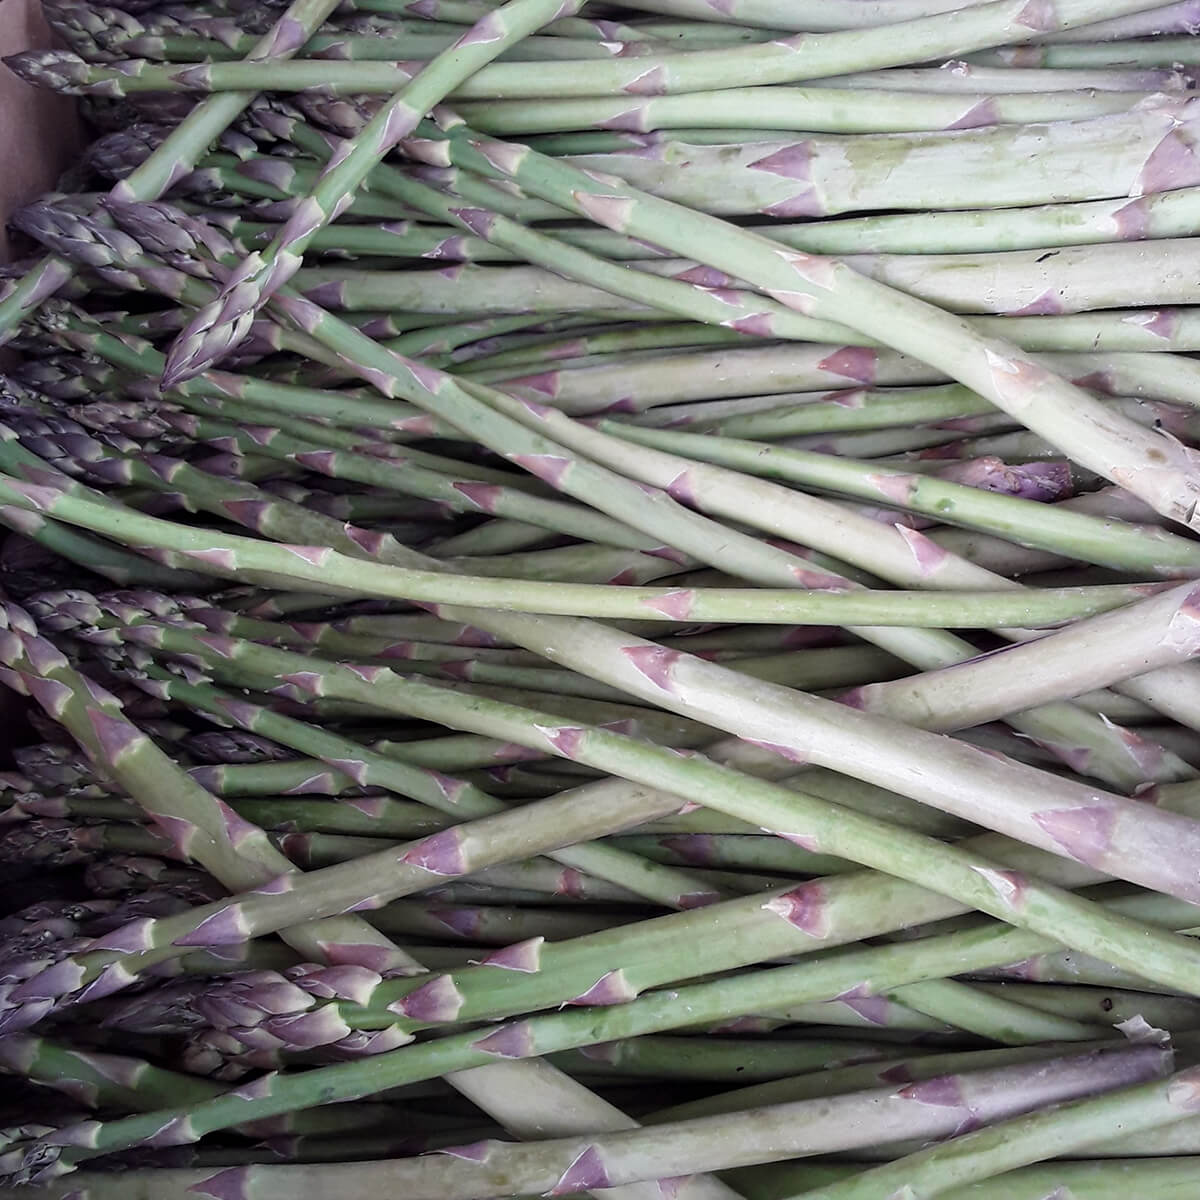 Affordable Asparagus